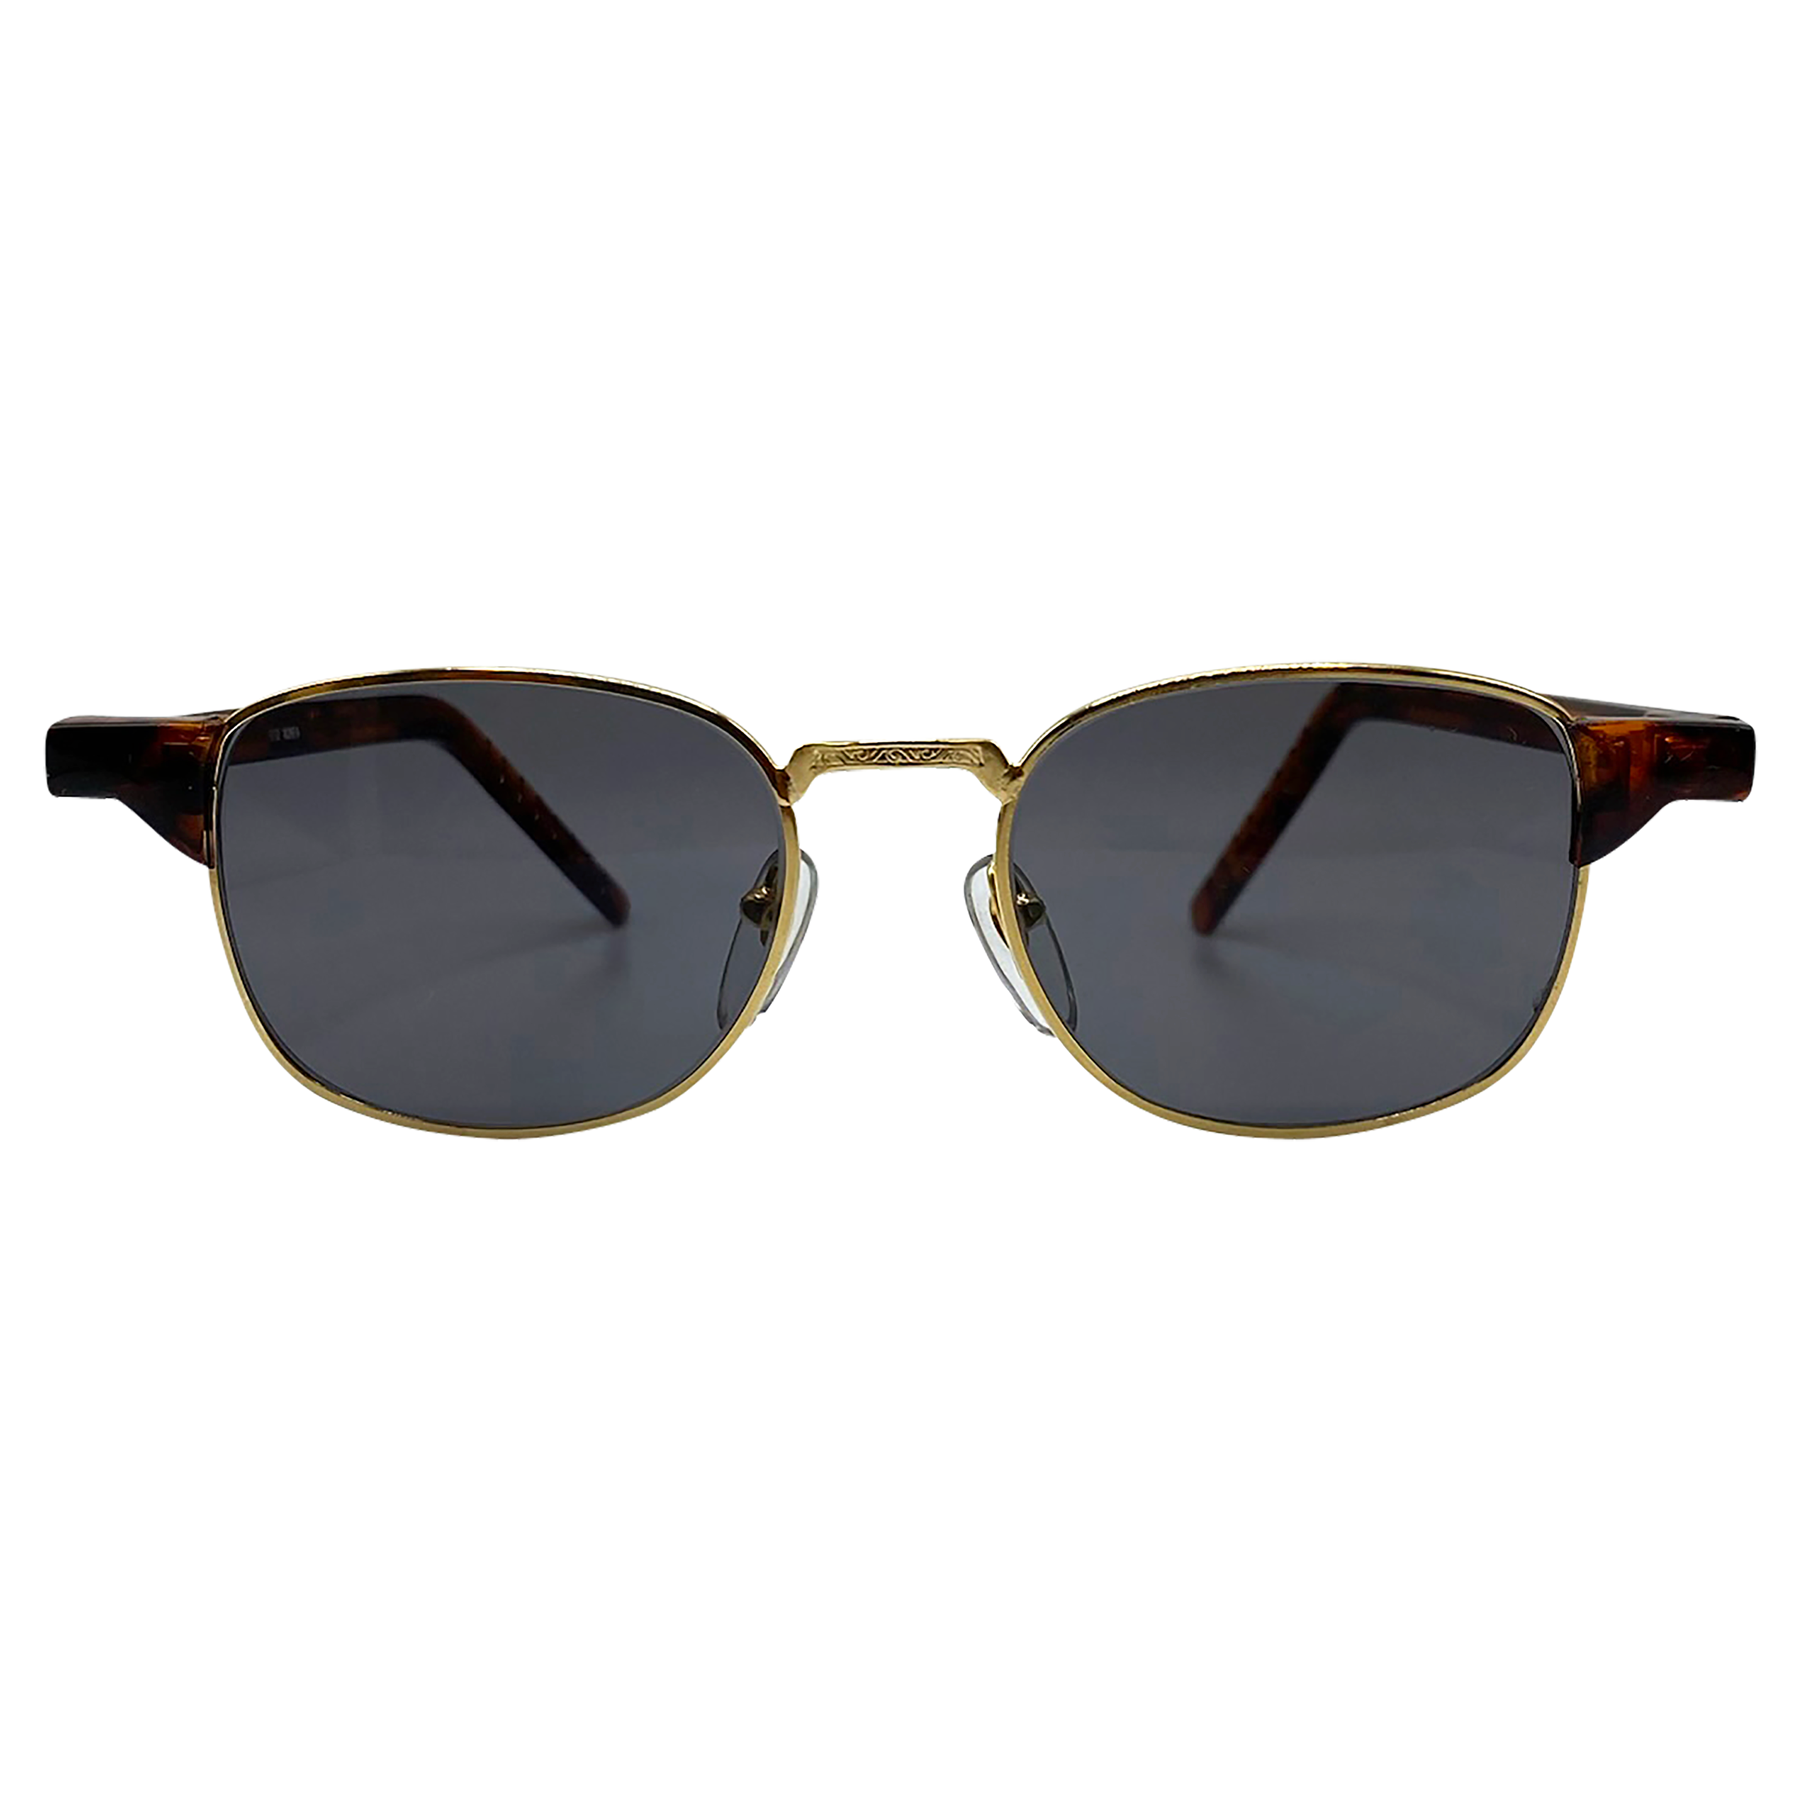 AILERON Tortoise Gold/Super Dark Square Sunglasses